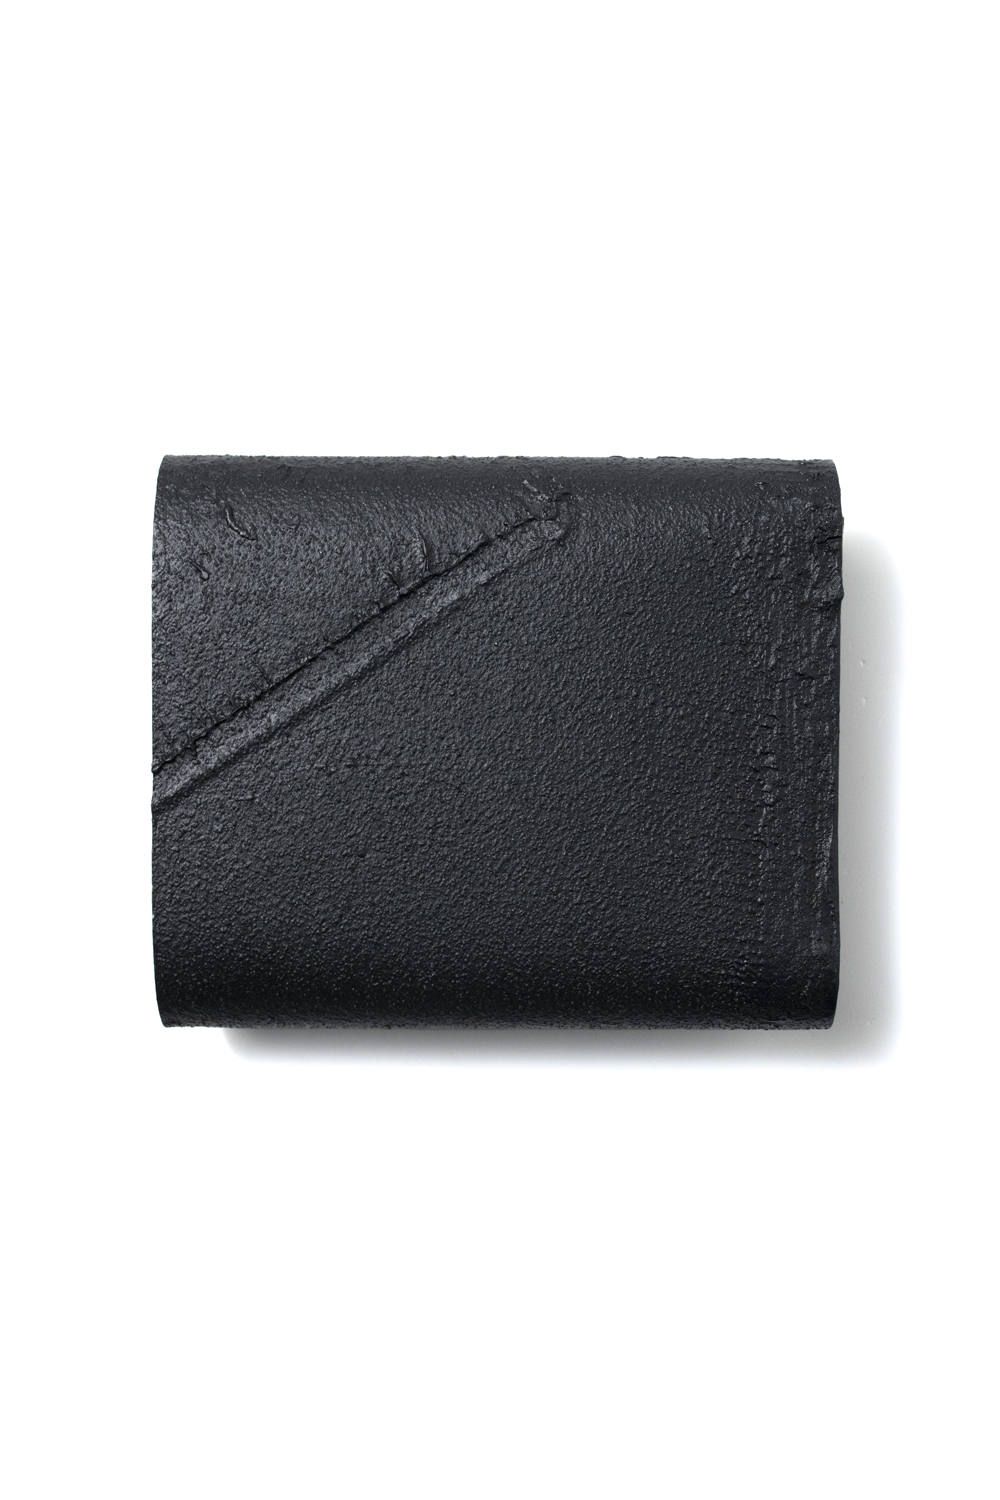 KAGARI YUSUKE - 三つ折り豆財布 [黒い壁] / mw11-bk | BONITA ONLINE 